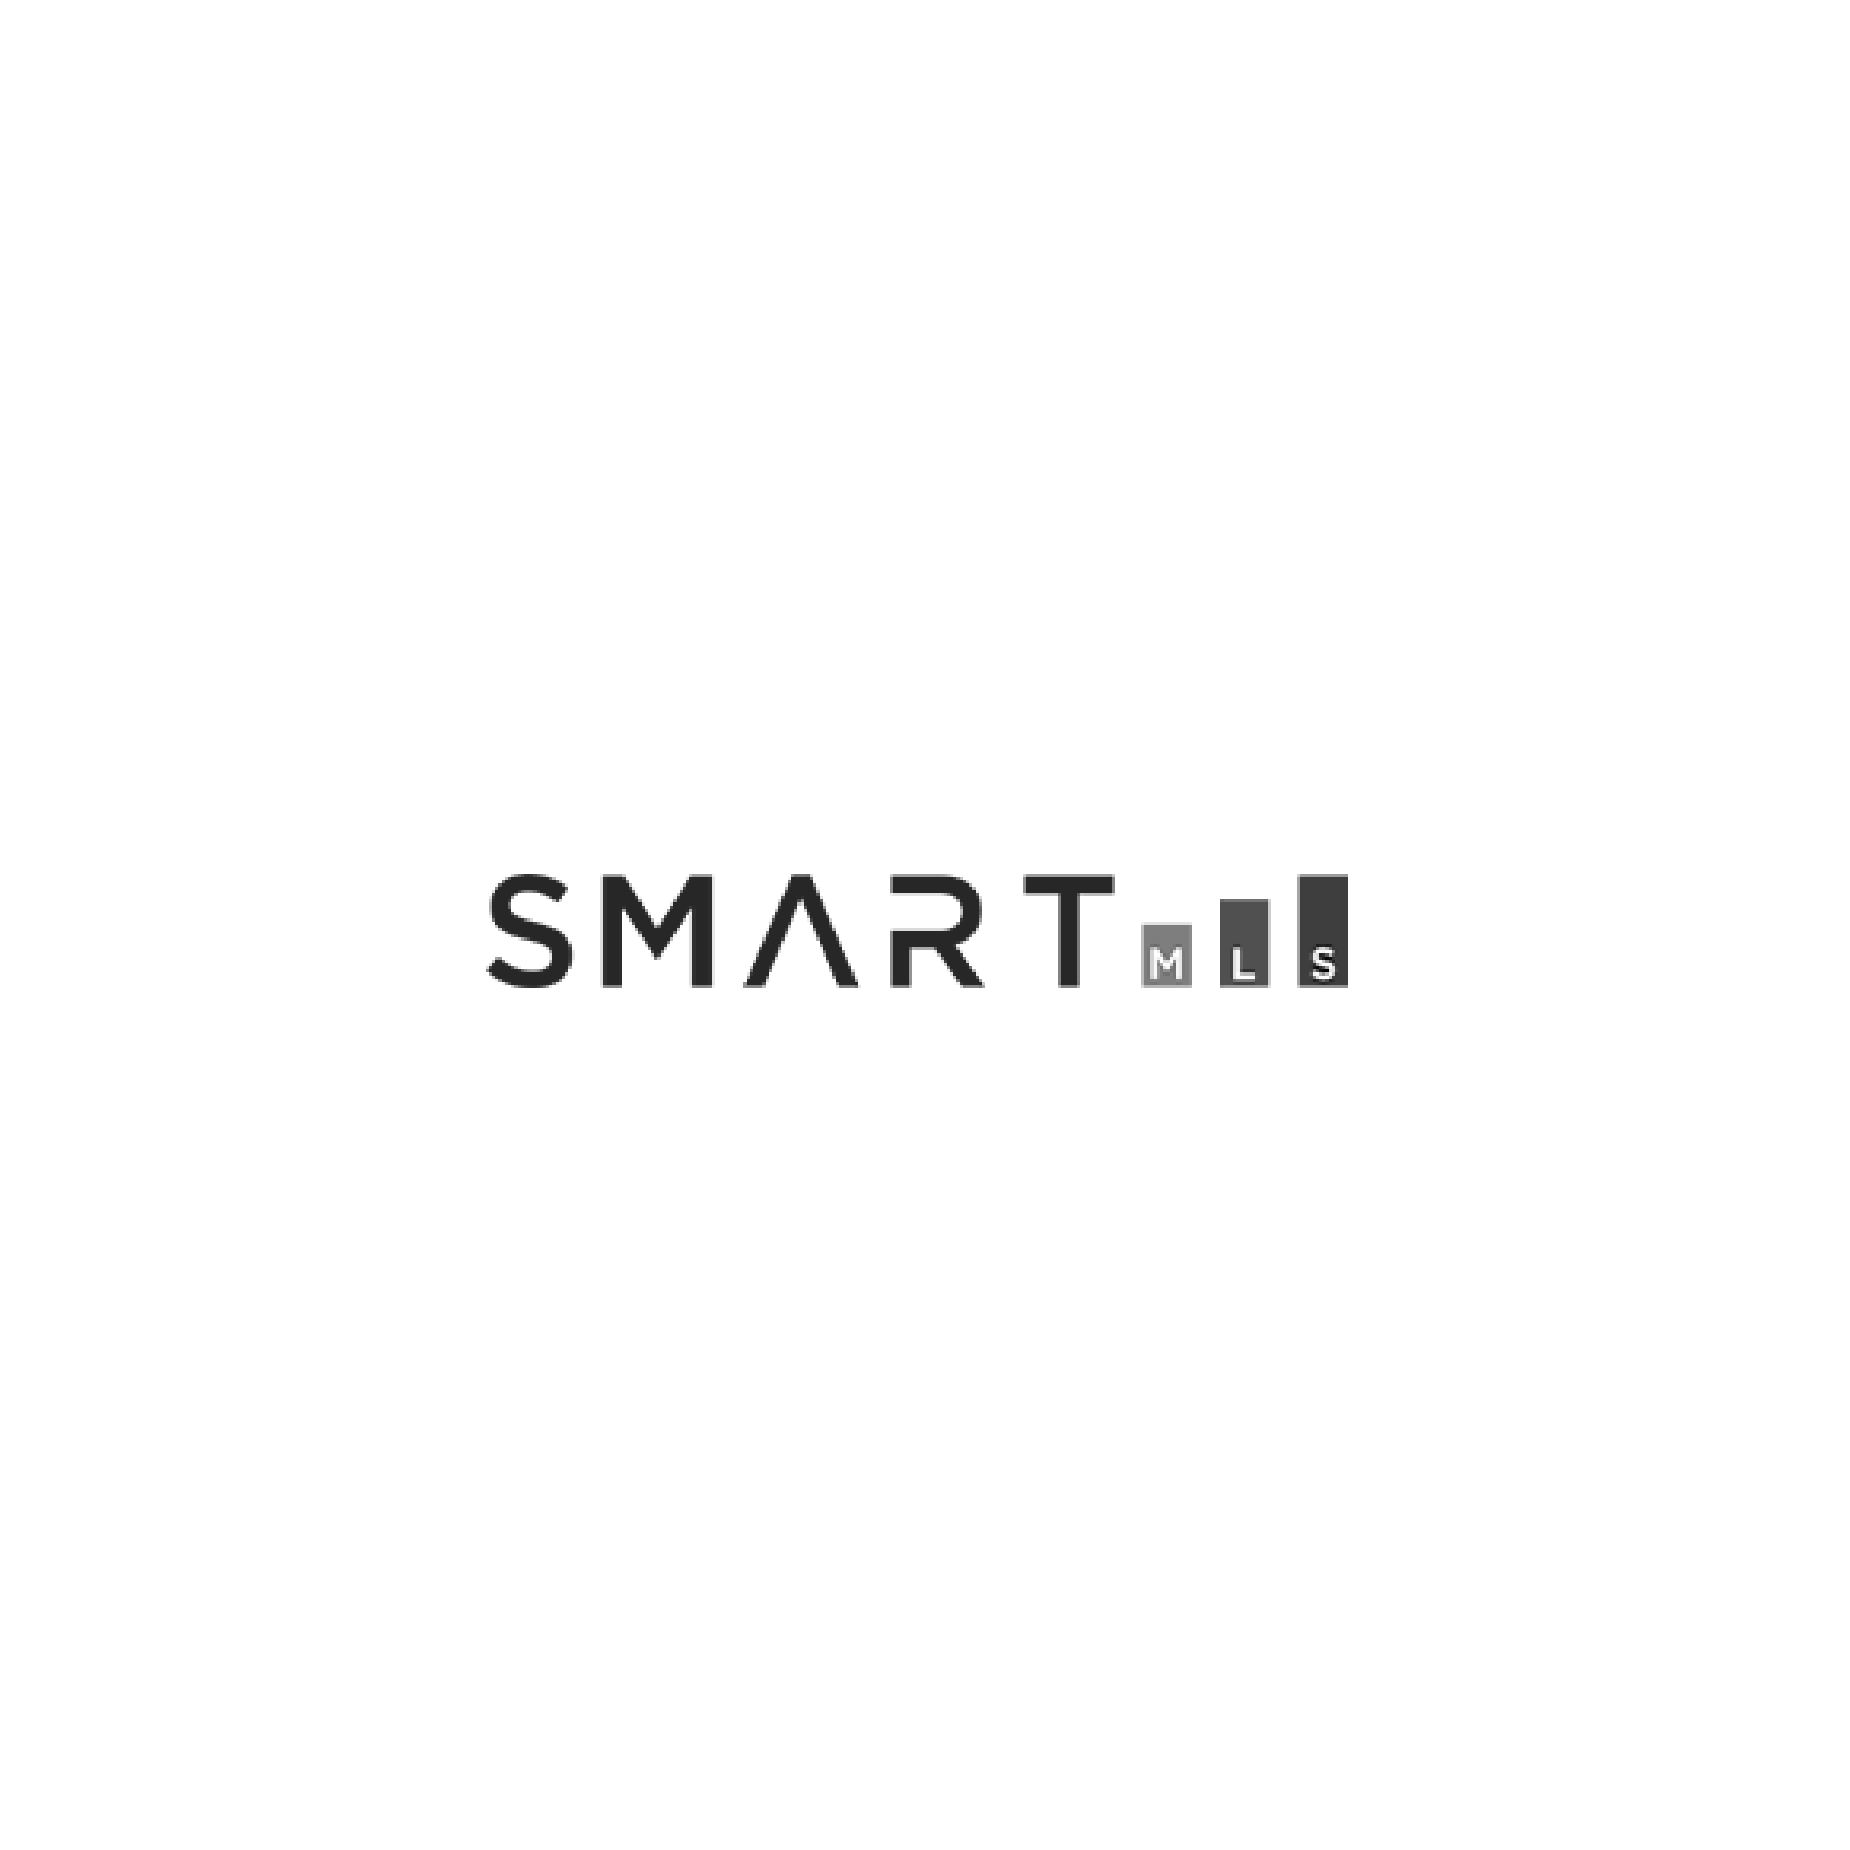 smartmls-01.png